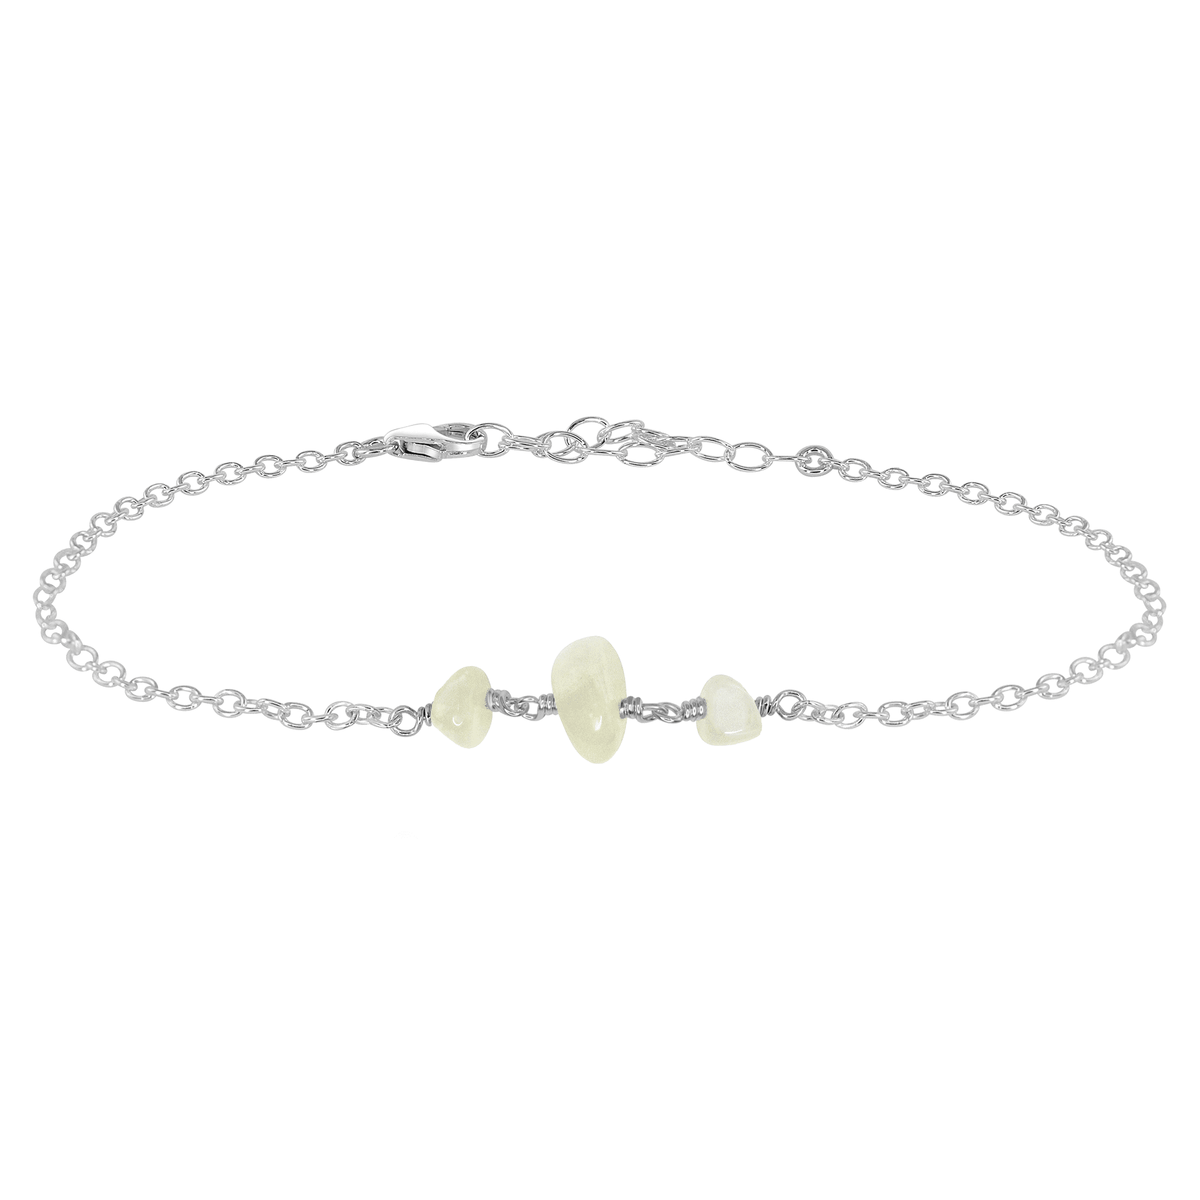 Beaded Chain Anklet - White Moonstone - Sterling Silver - Luna Tide Handmade Jewellery